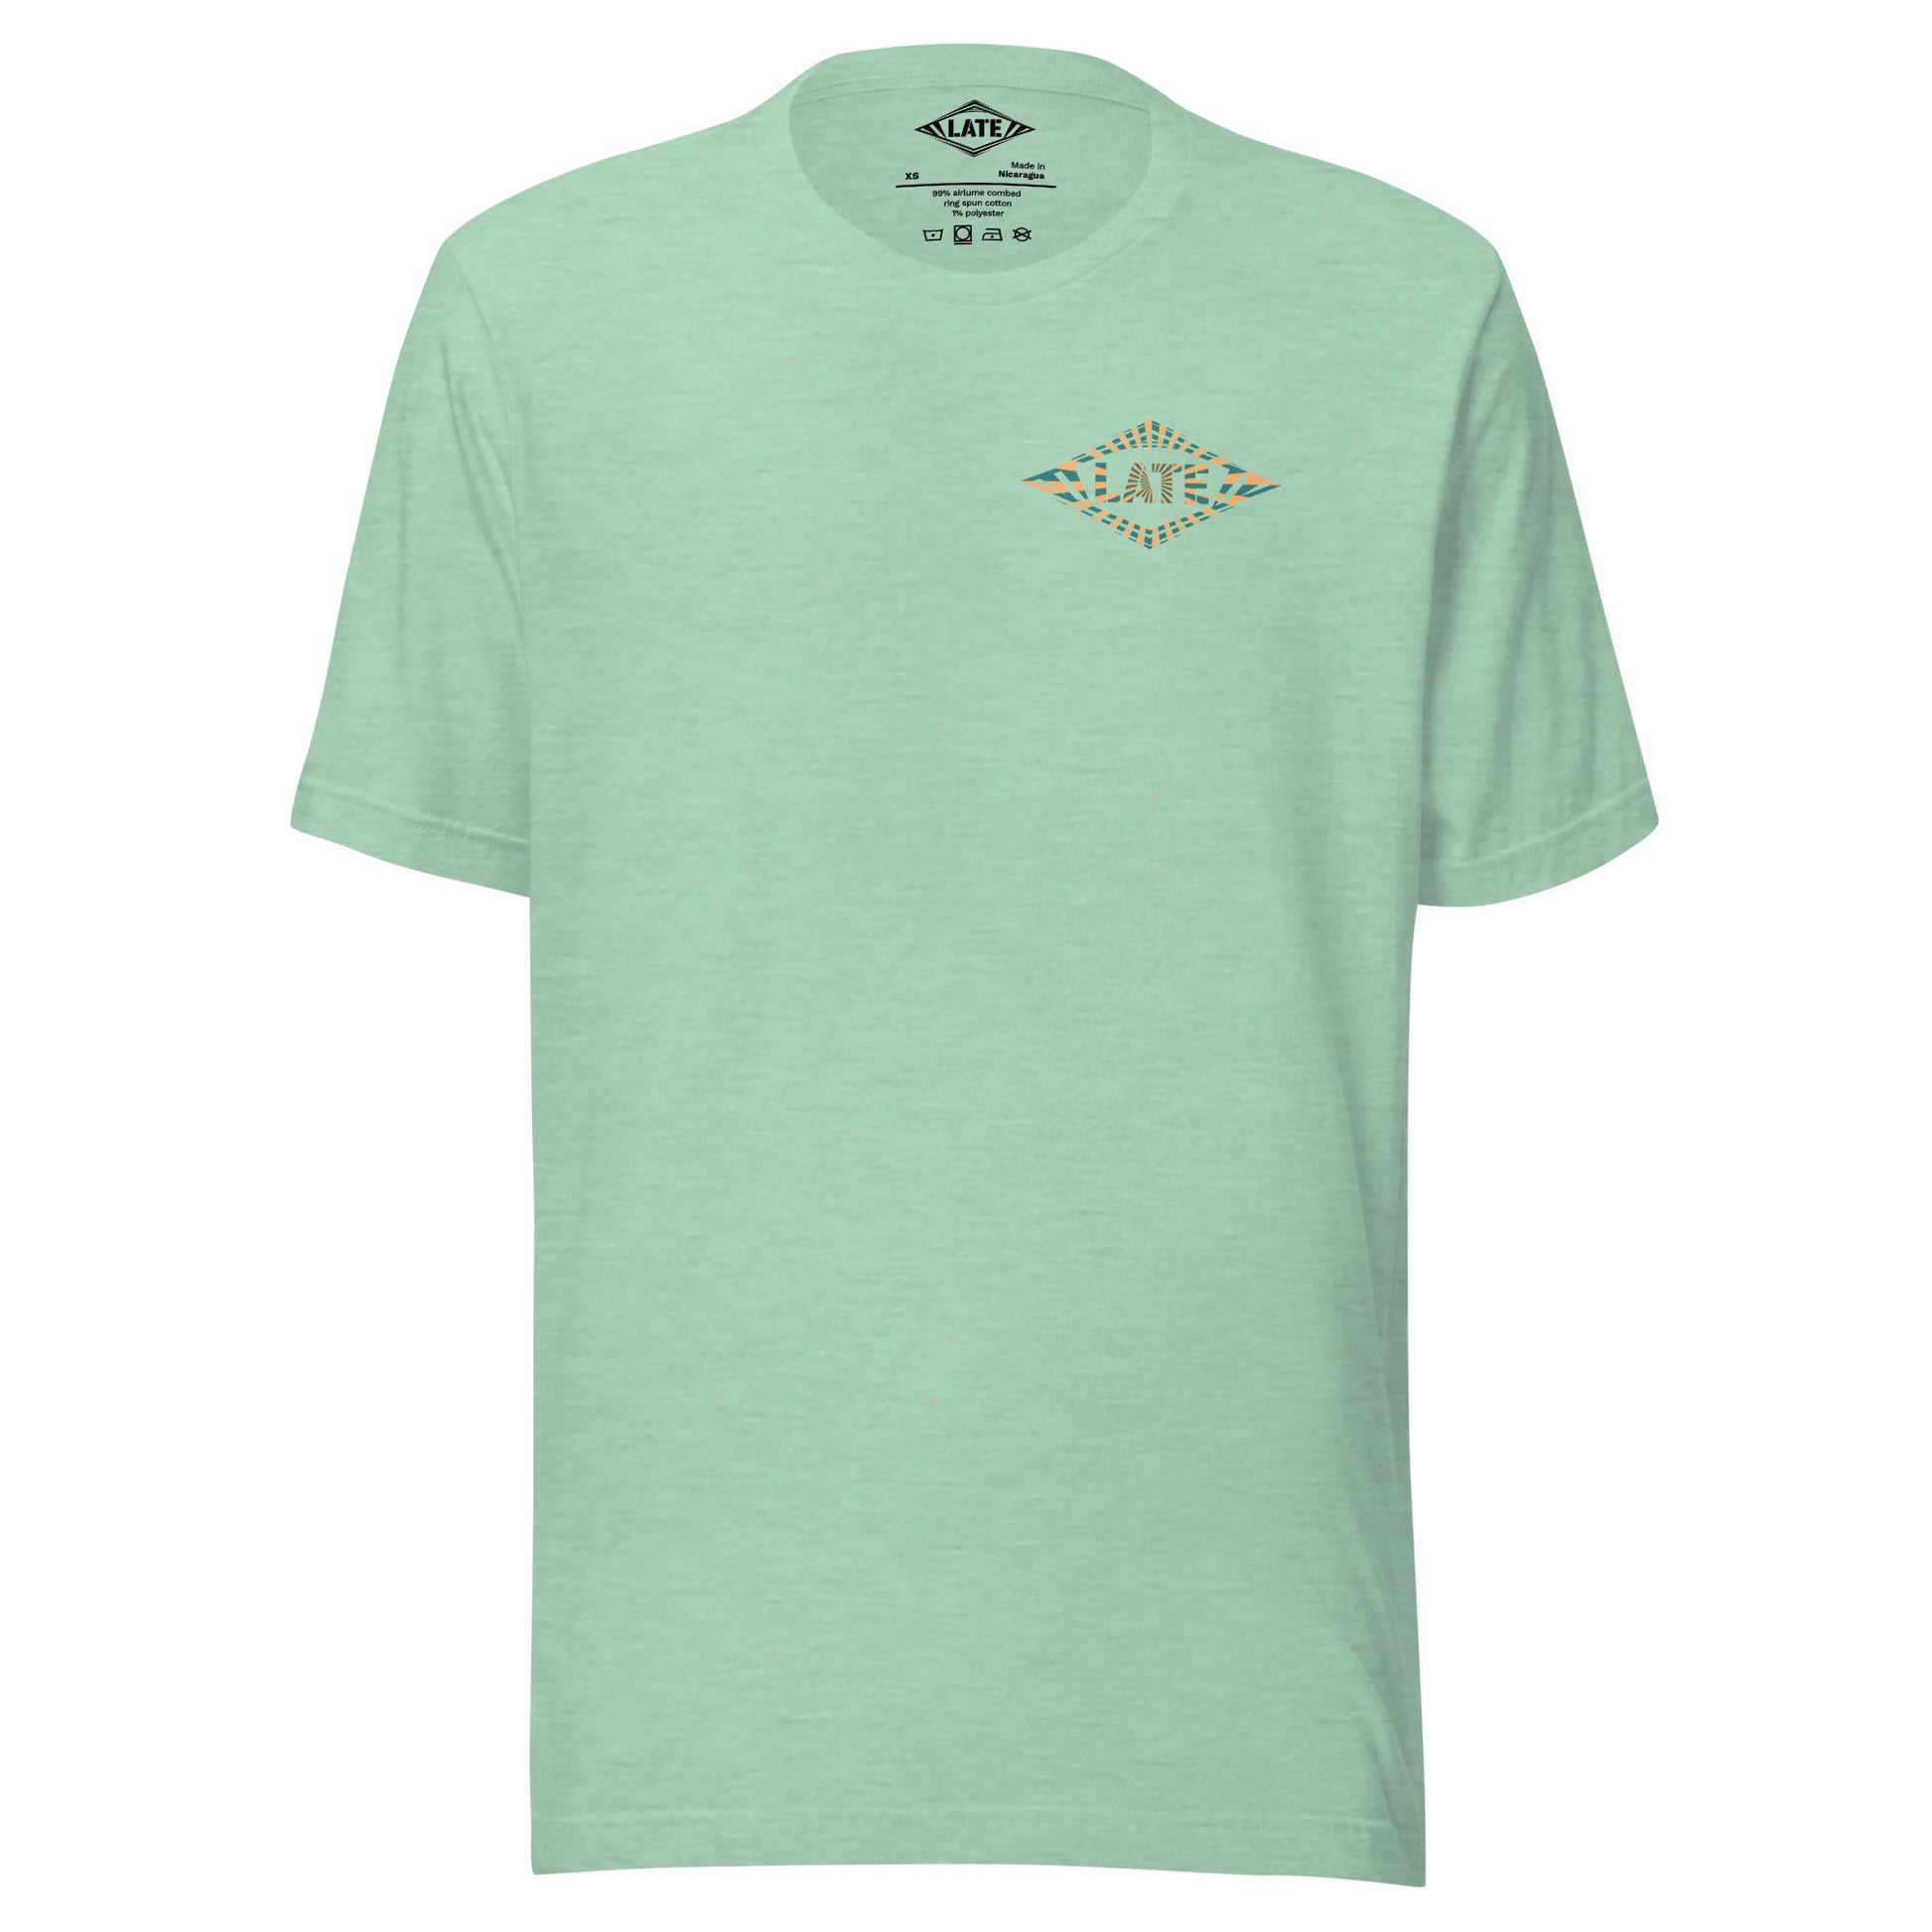 T-Shirt Walk Of Life logo Late surfing design old school hippie tshirt couleur vert menthe